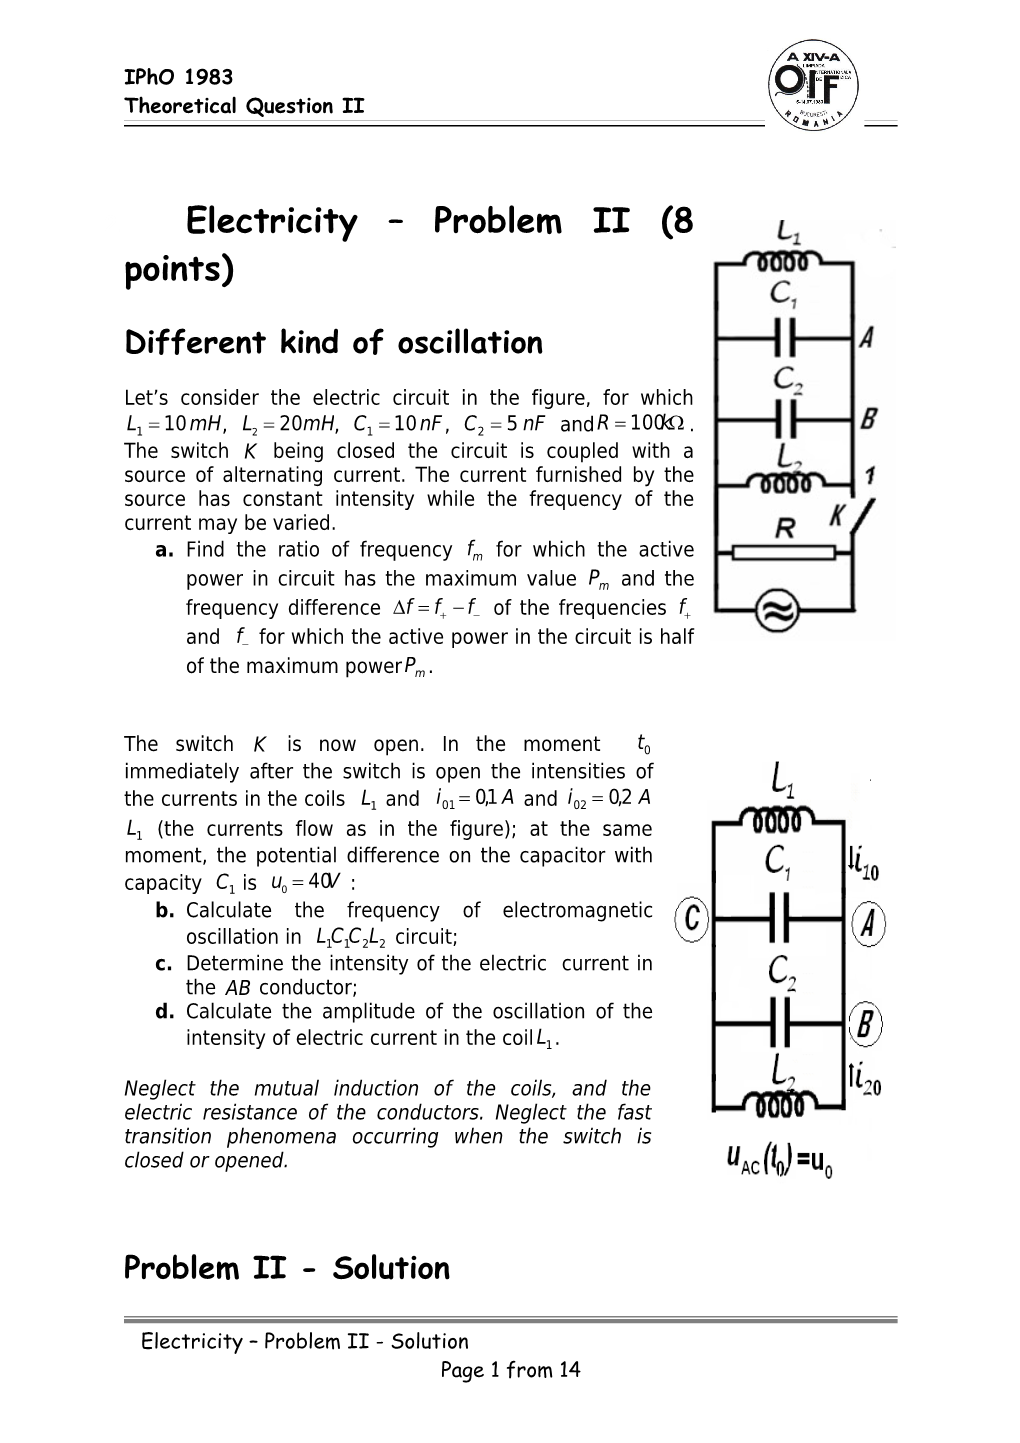 2.Electricity Problem II (8 Points)